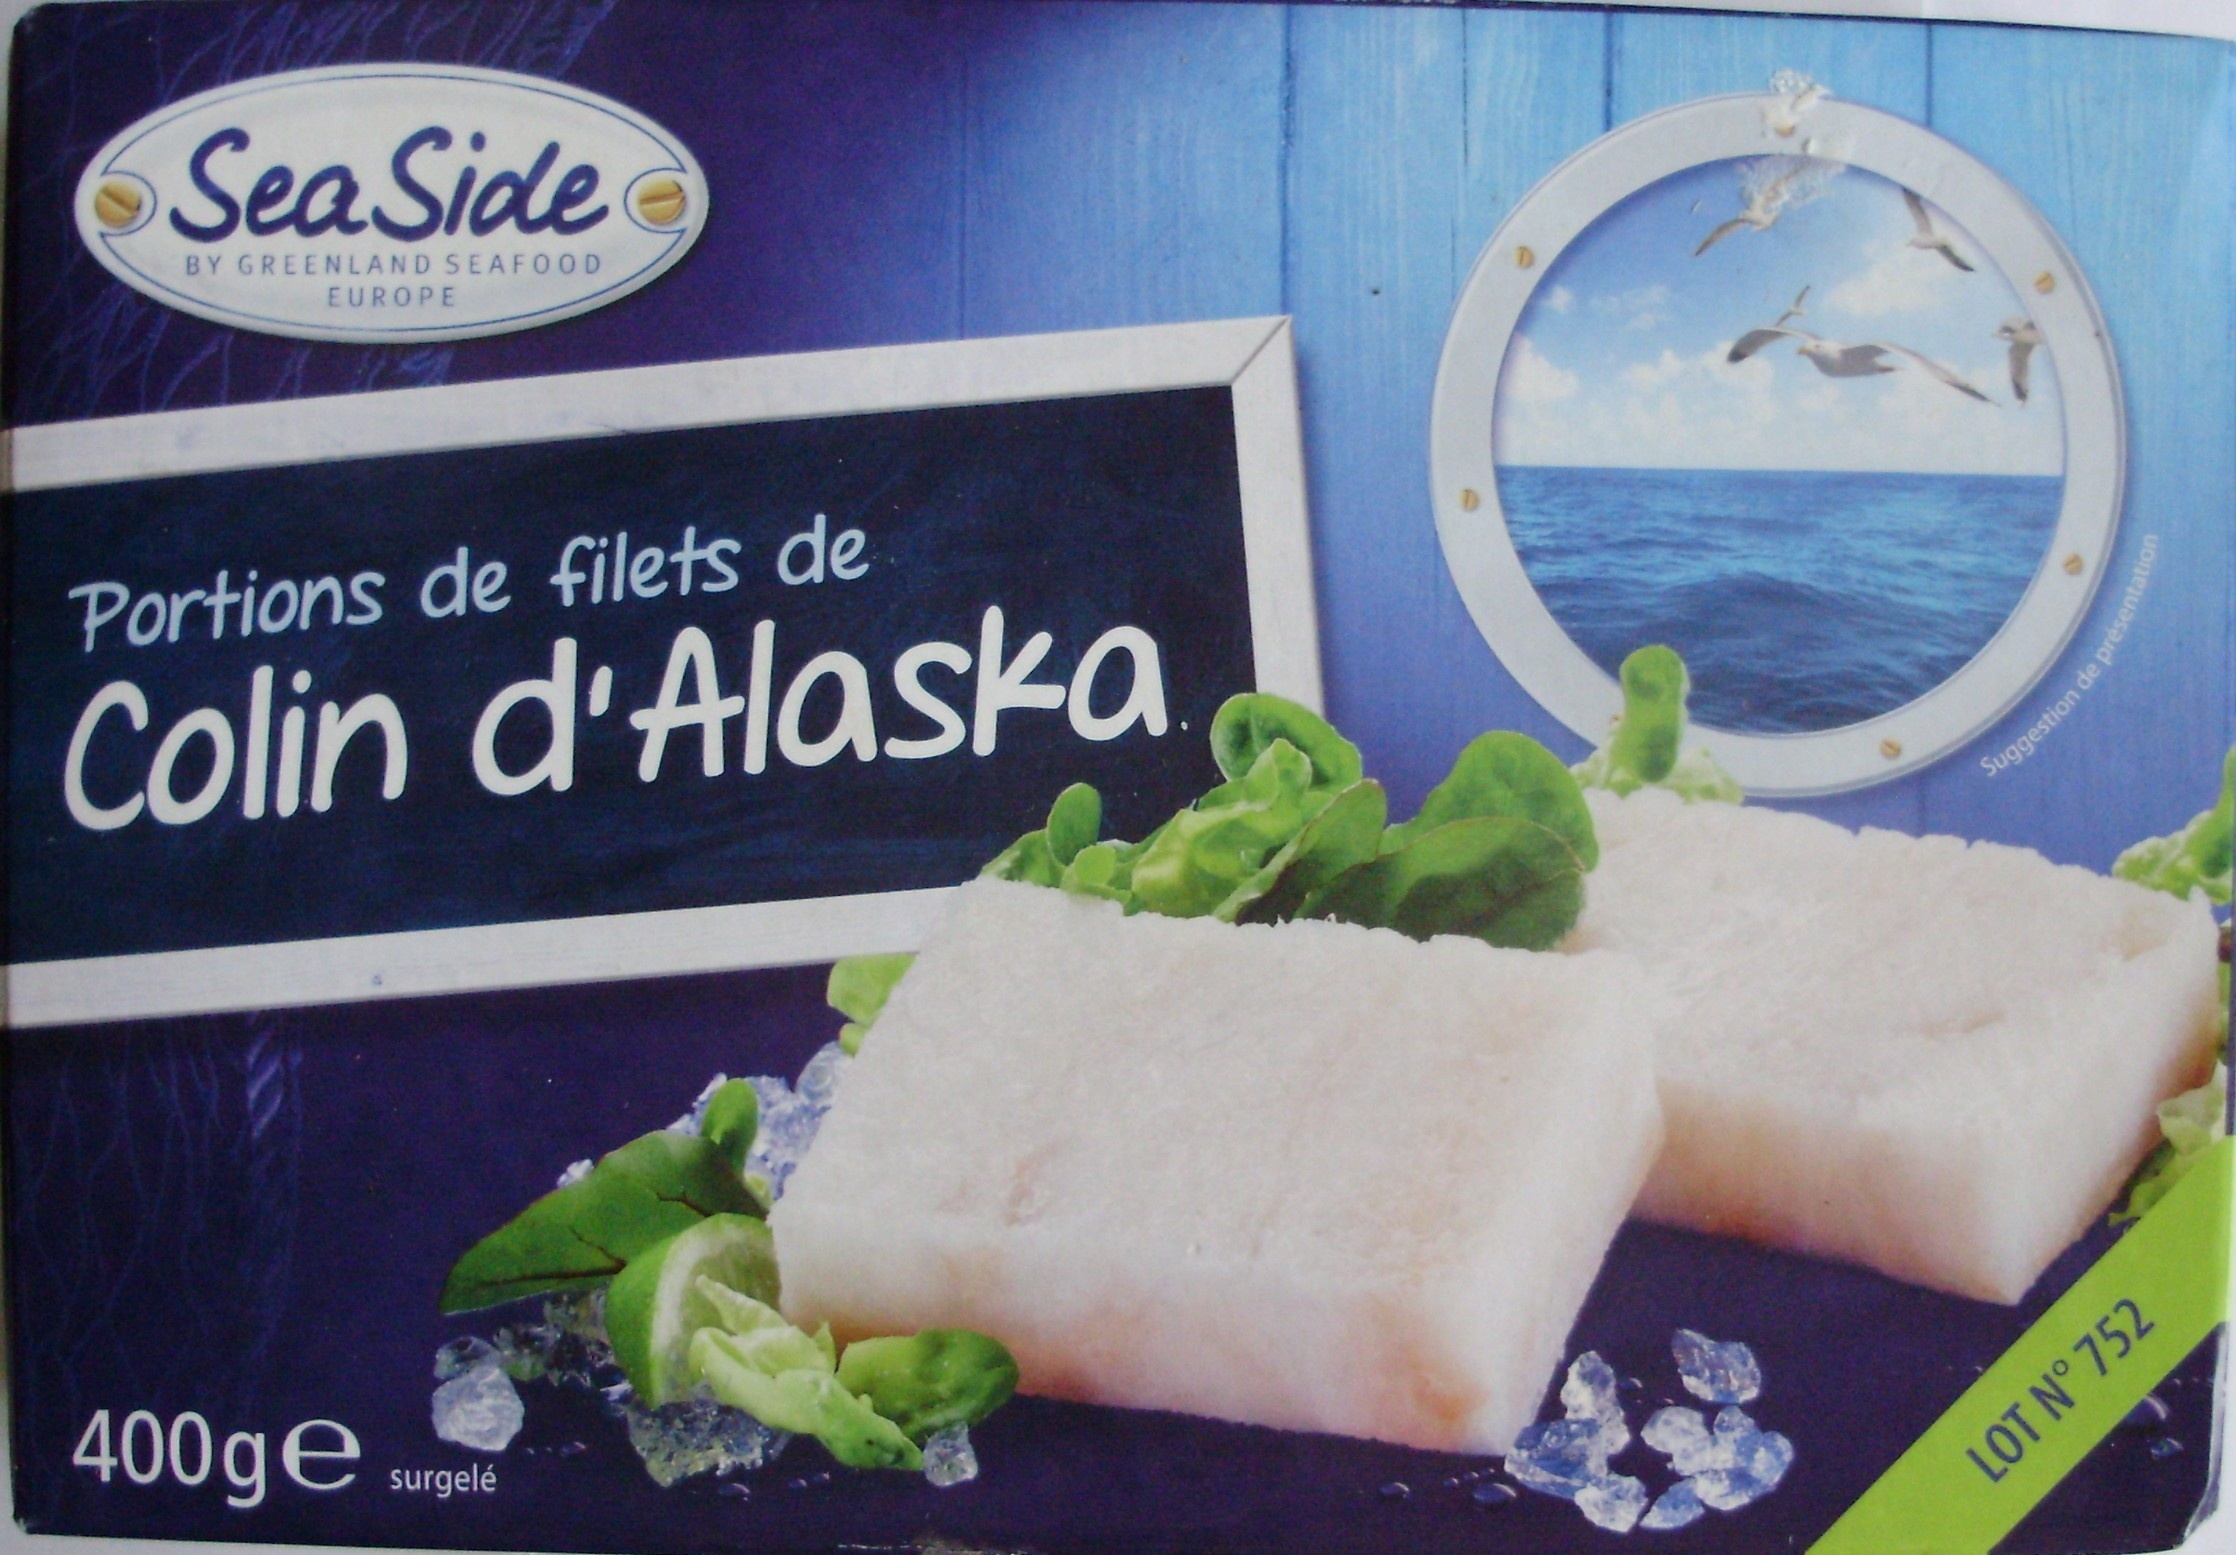 Portions de filets de Colin d'Alaska, surgelé - Produkt - fr